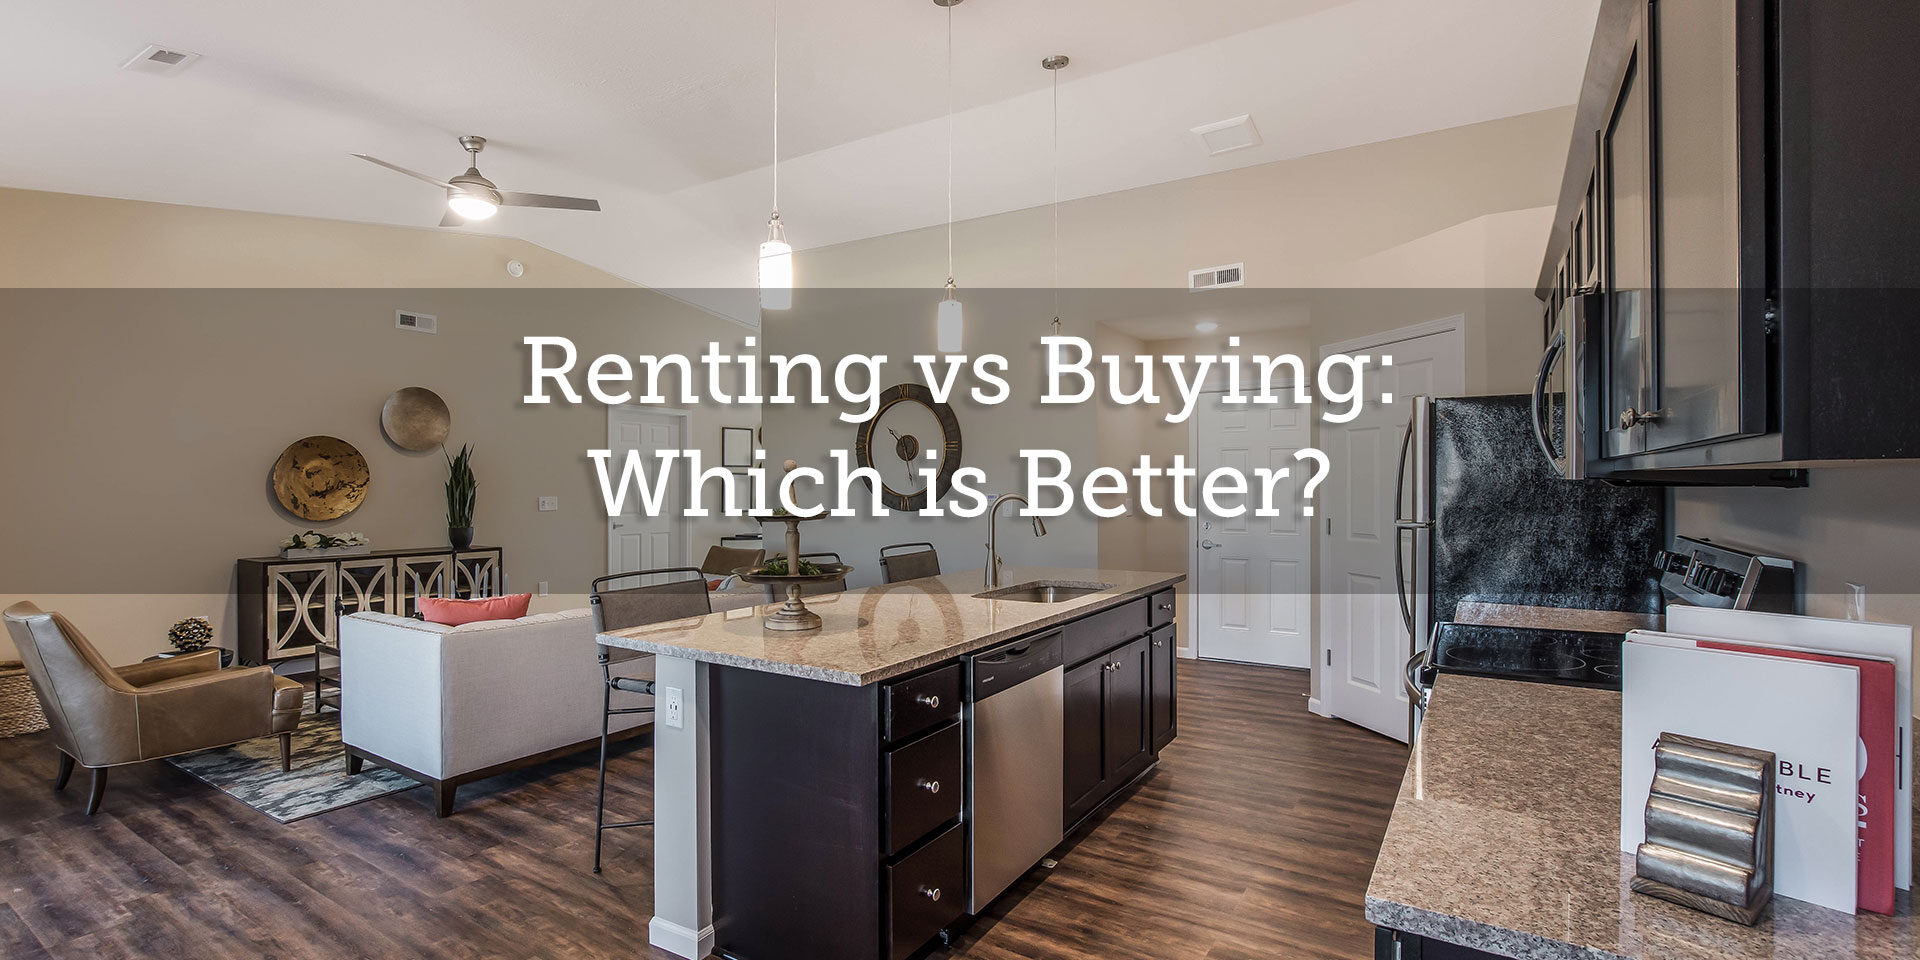 Renting vs Buying - martha's story